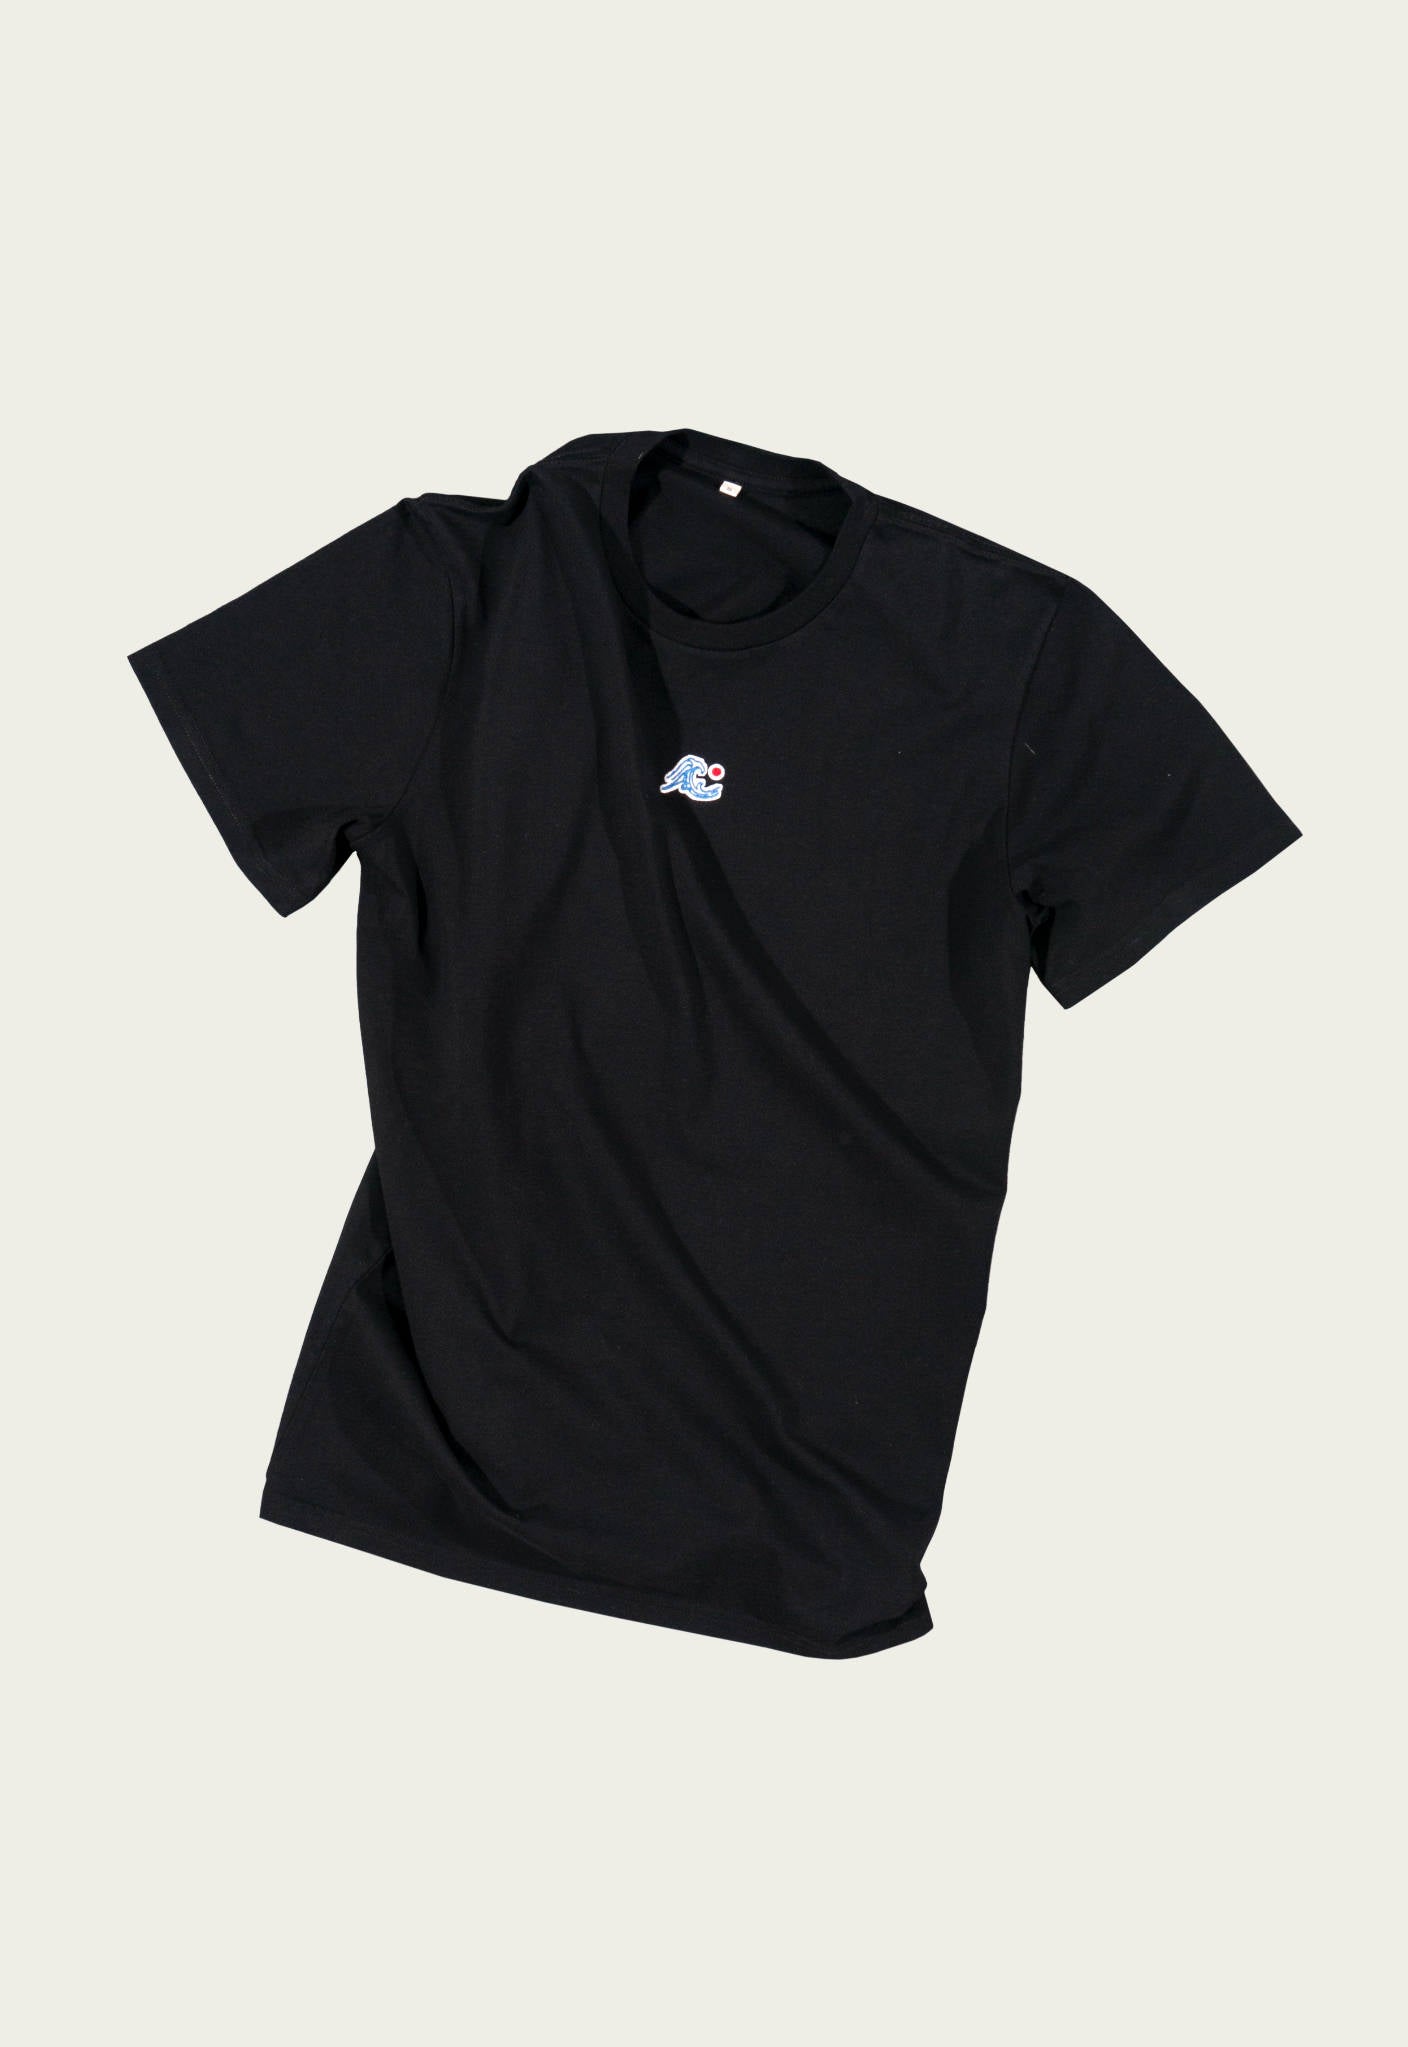 Oy Accessories T Shirt Unisex Black Wave 01